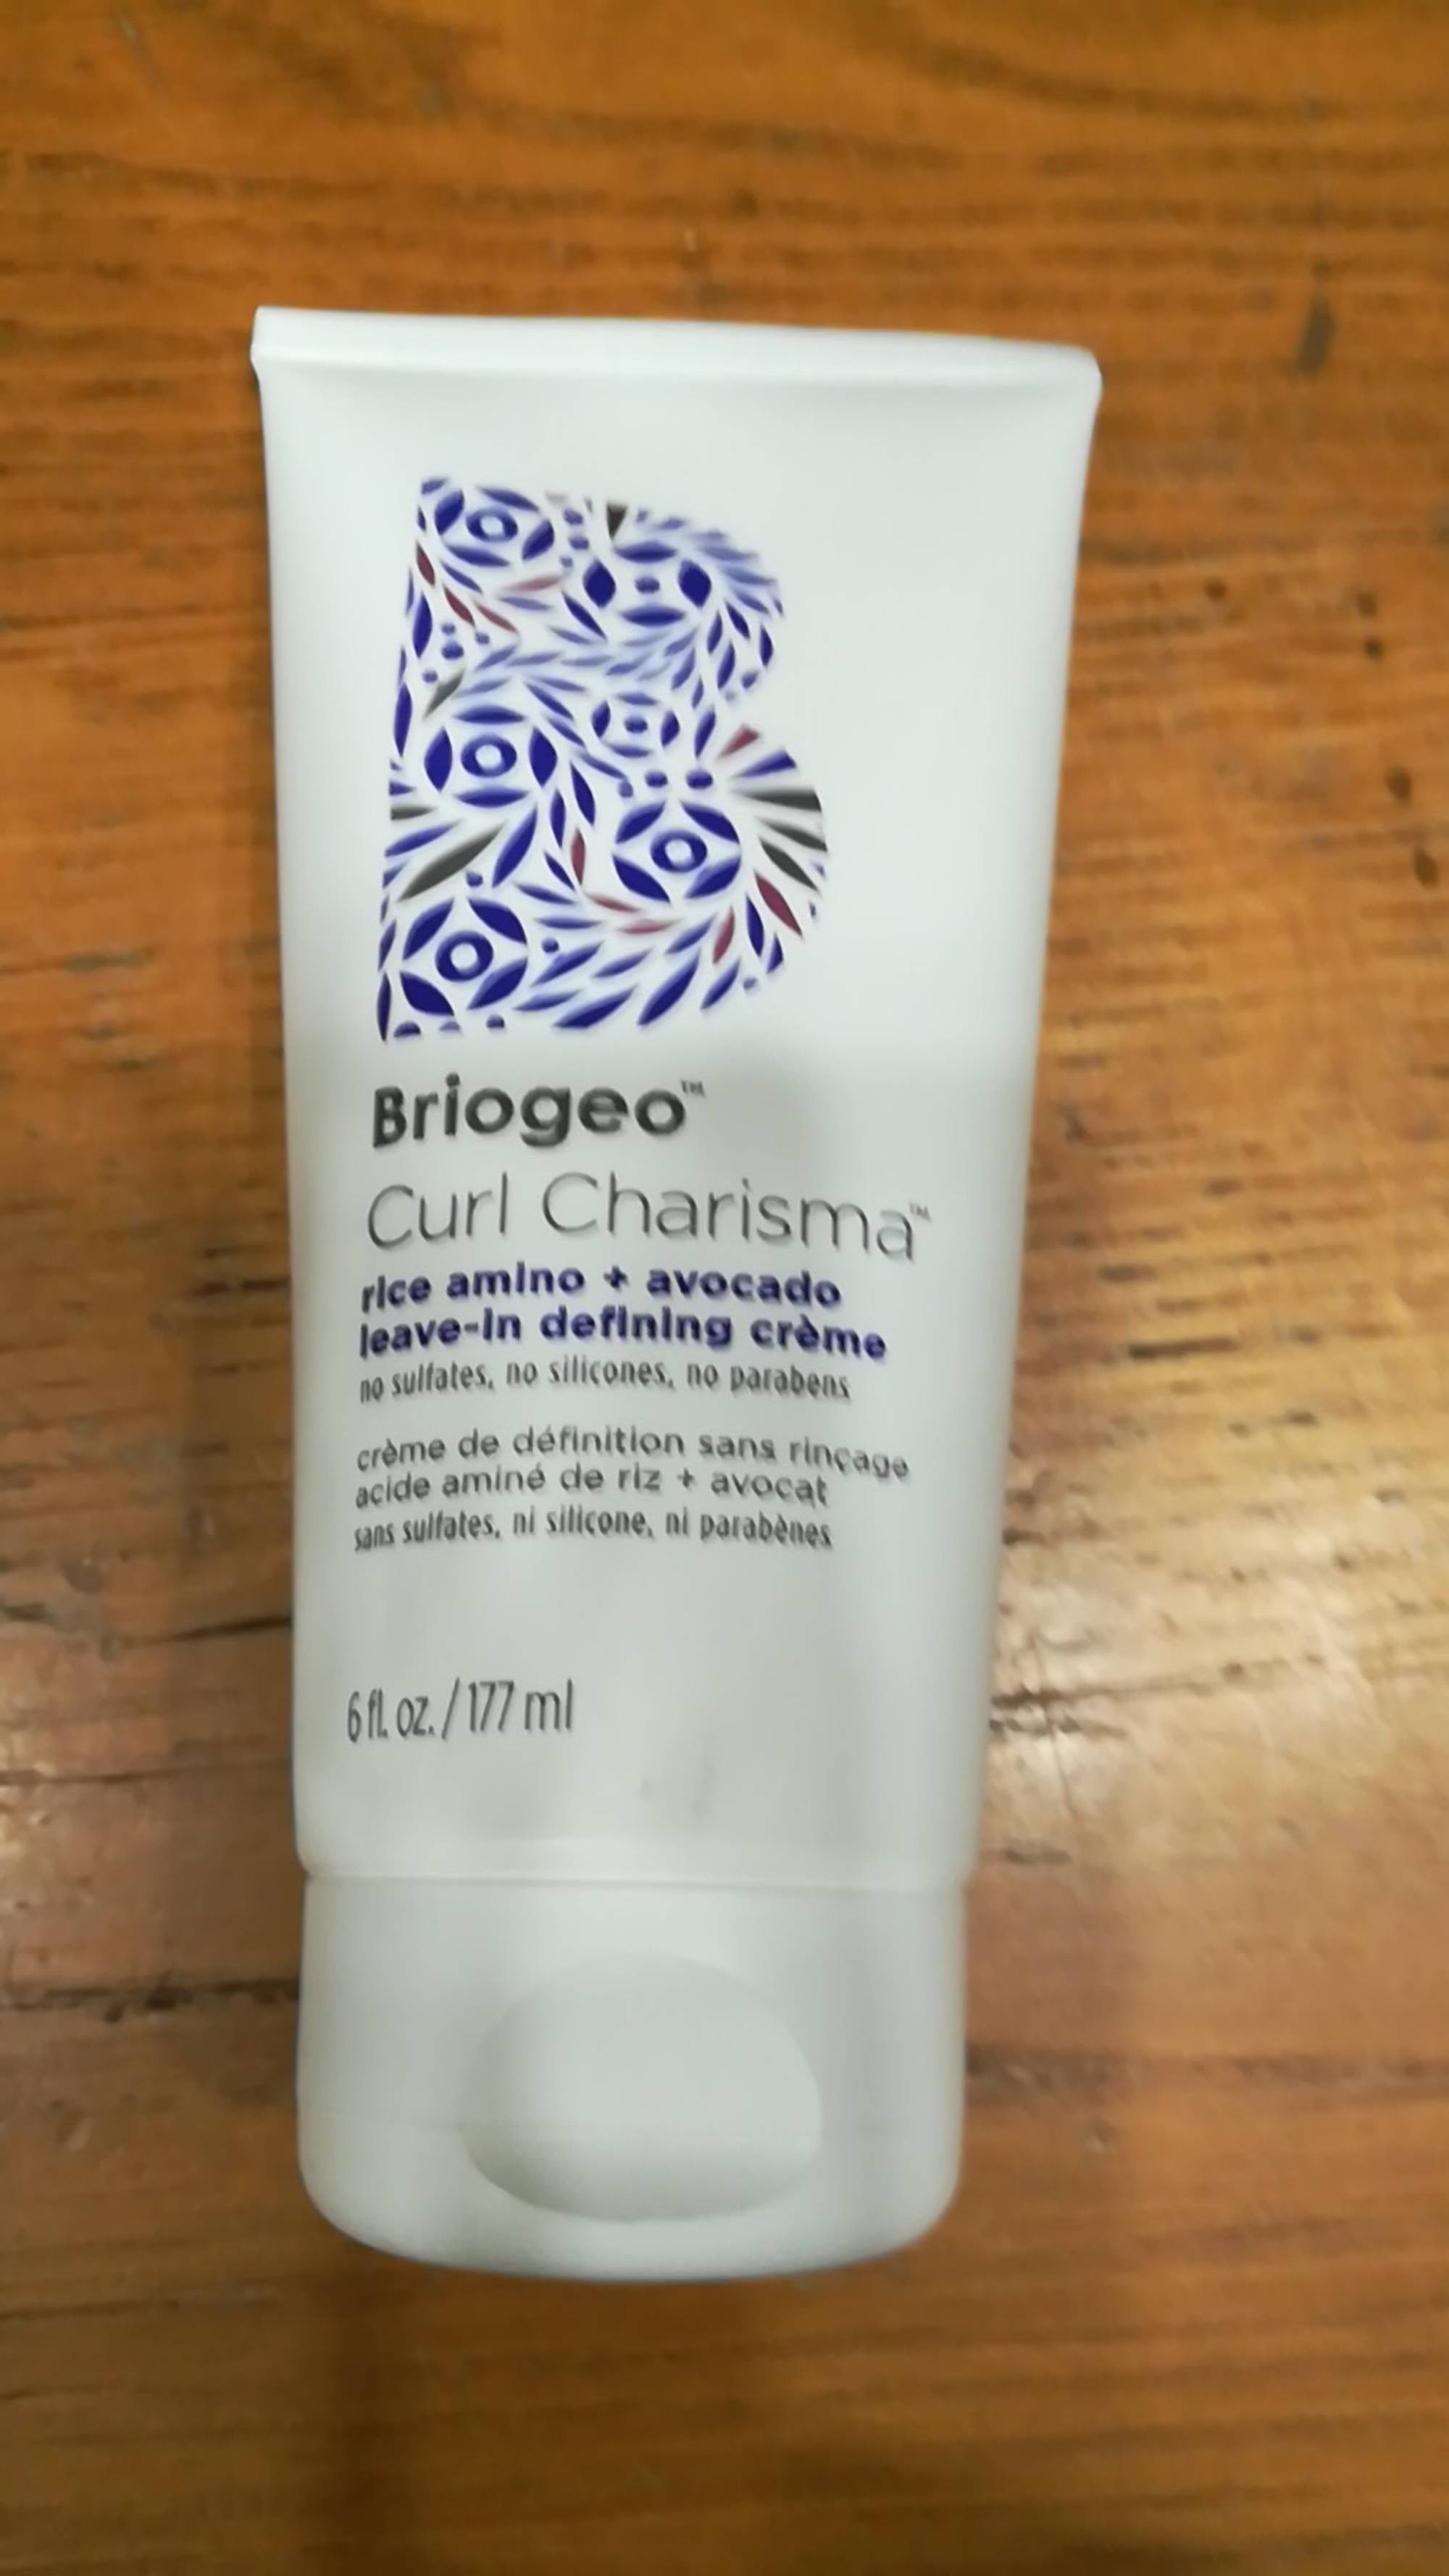 BRIOGEO - Curl charisma - Rice amino + avocado leave-in defining crème